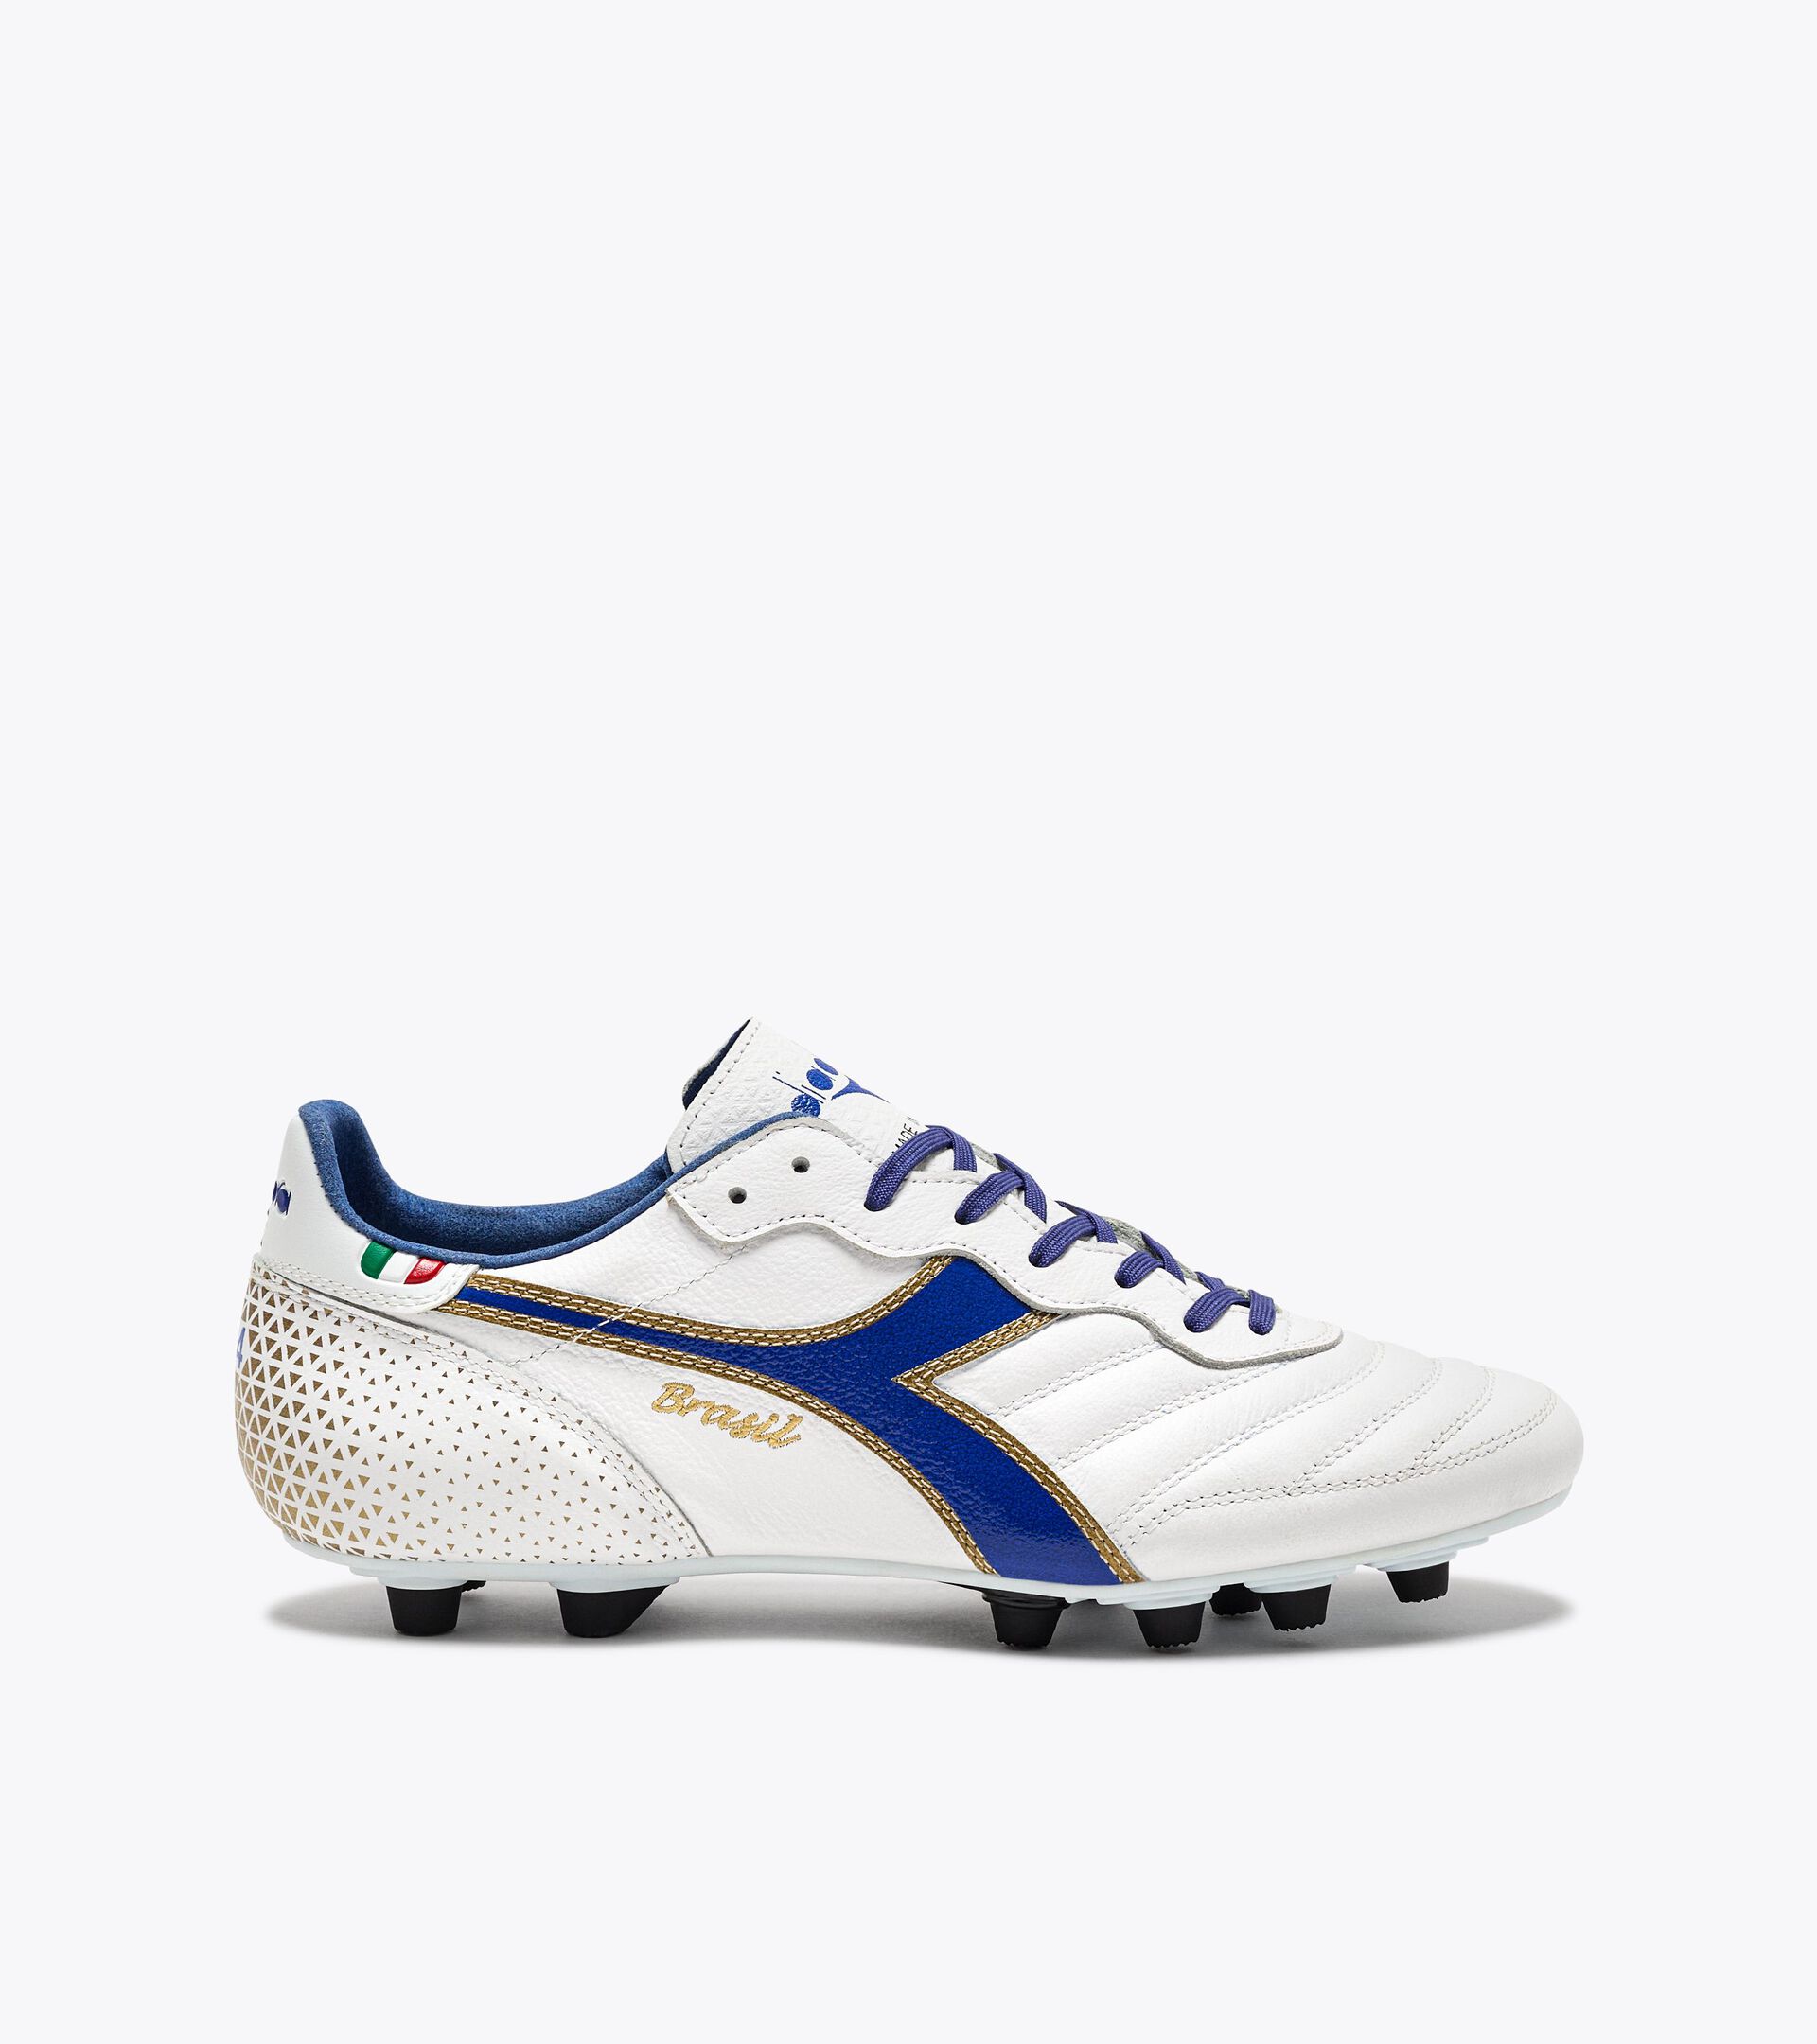 Chaussures de football pour terrains compacts - Made in Italy - Gender neutral  BRASIL ITALY OG GR LT+  MDPU BLANC/MAZARINBLEU/OR VIF - Diadora